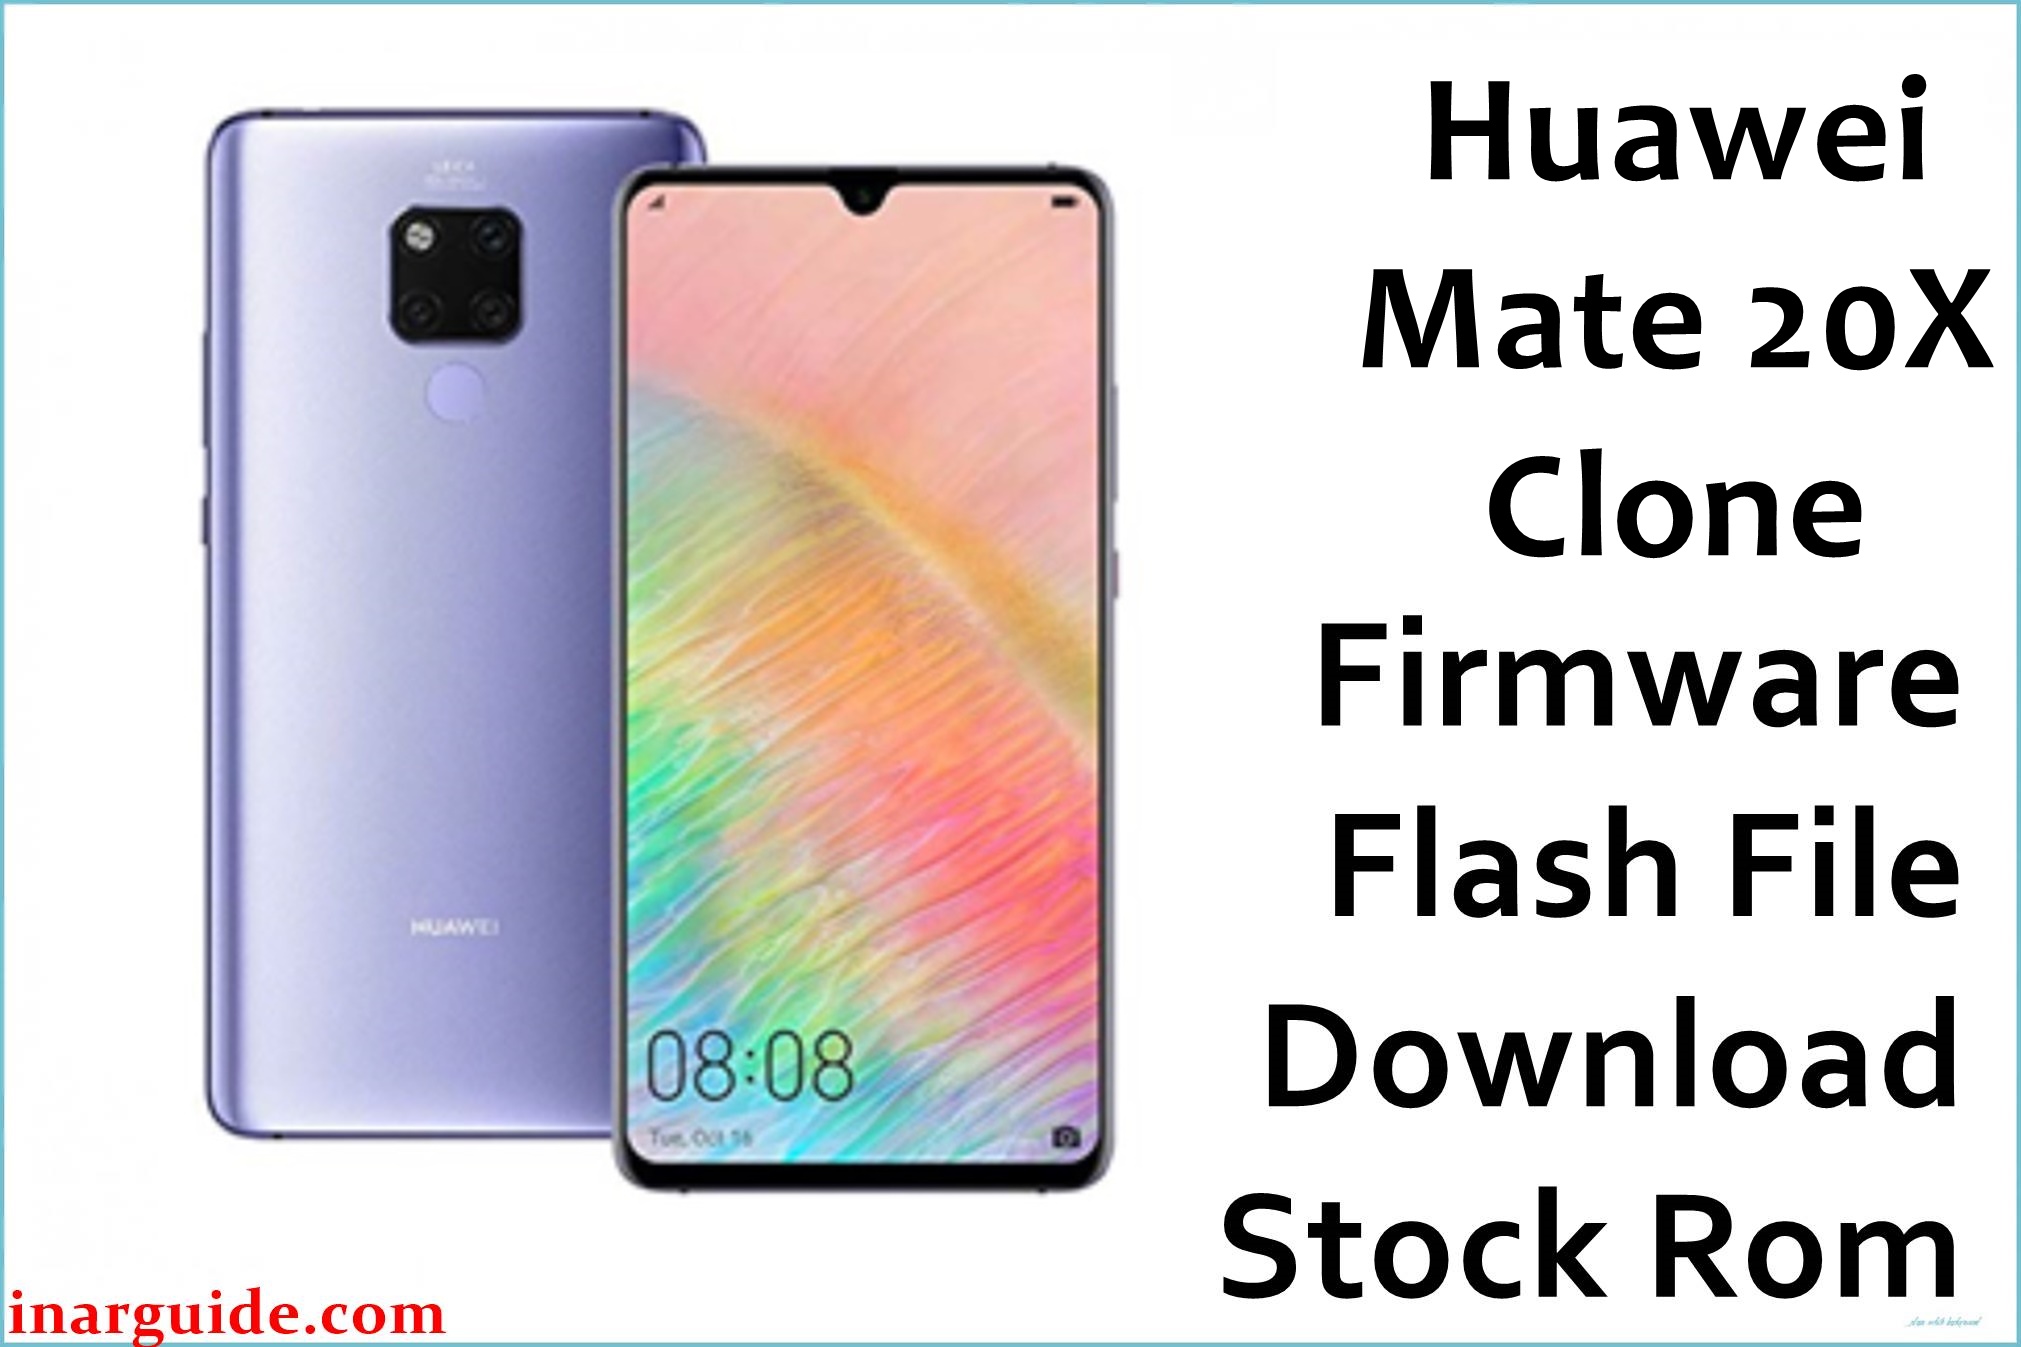 Huawei Mate 20X Clone